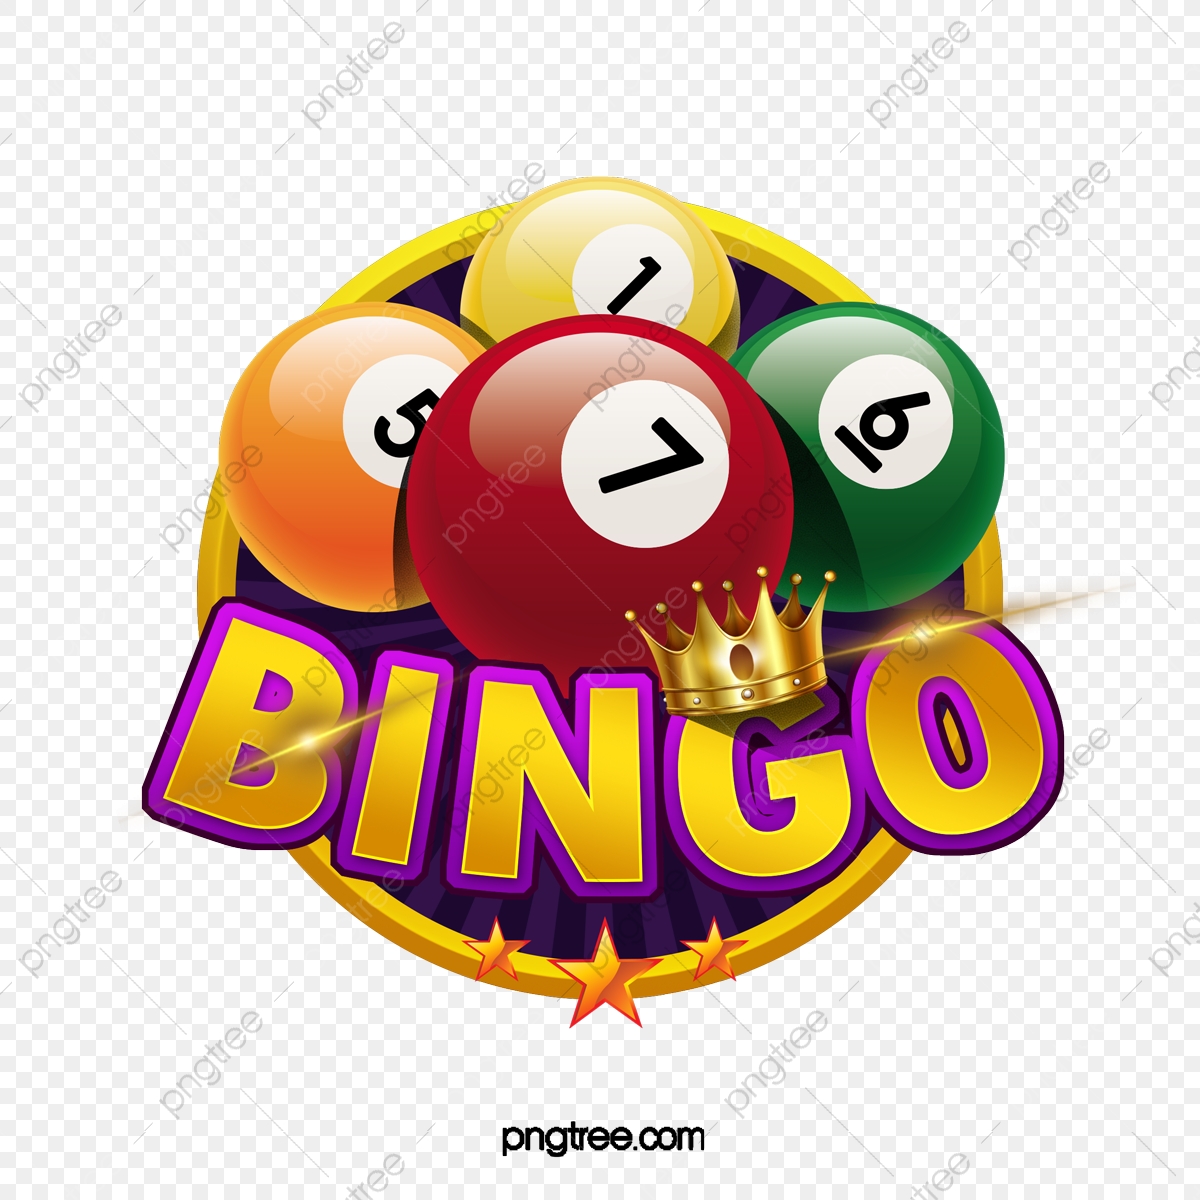 Play free bingo